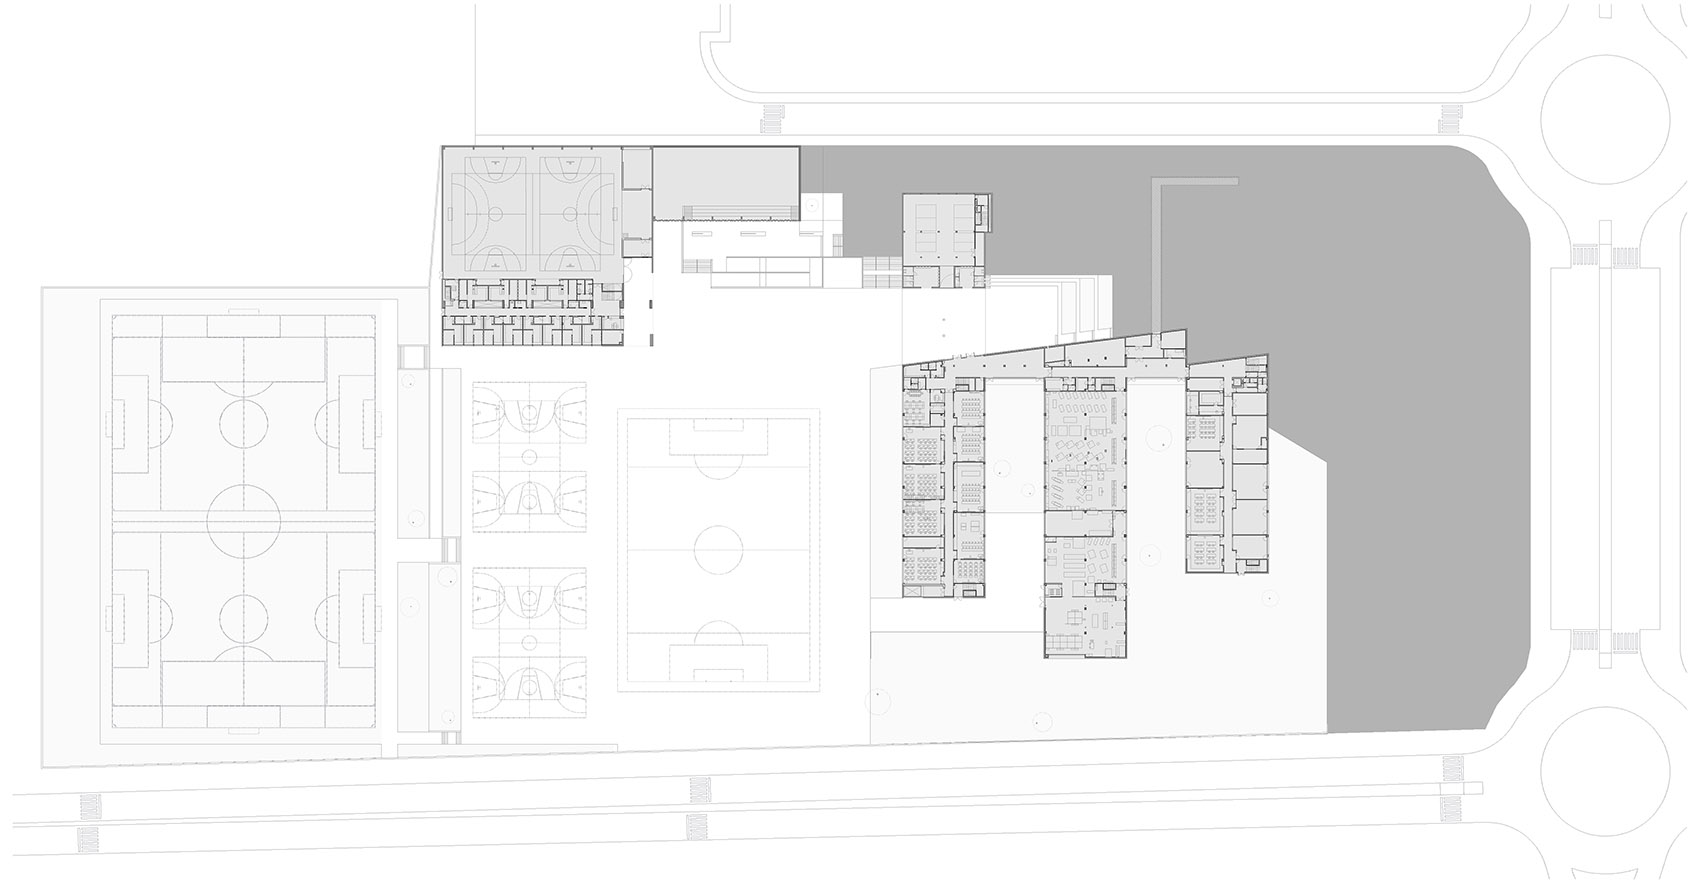 Salesianos Pamplona工艺学校，西班牙/体块与空地交错形成丰富空间体验-78